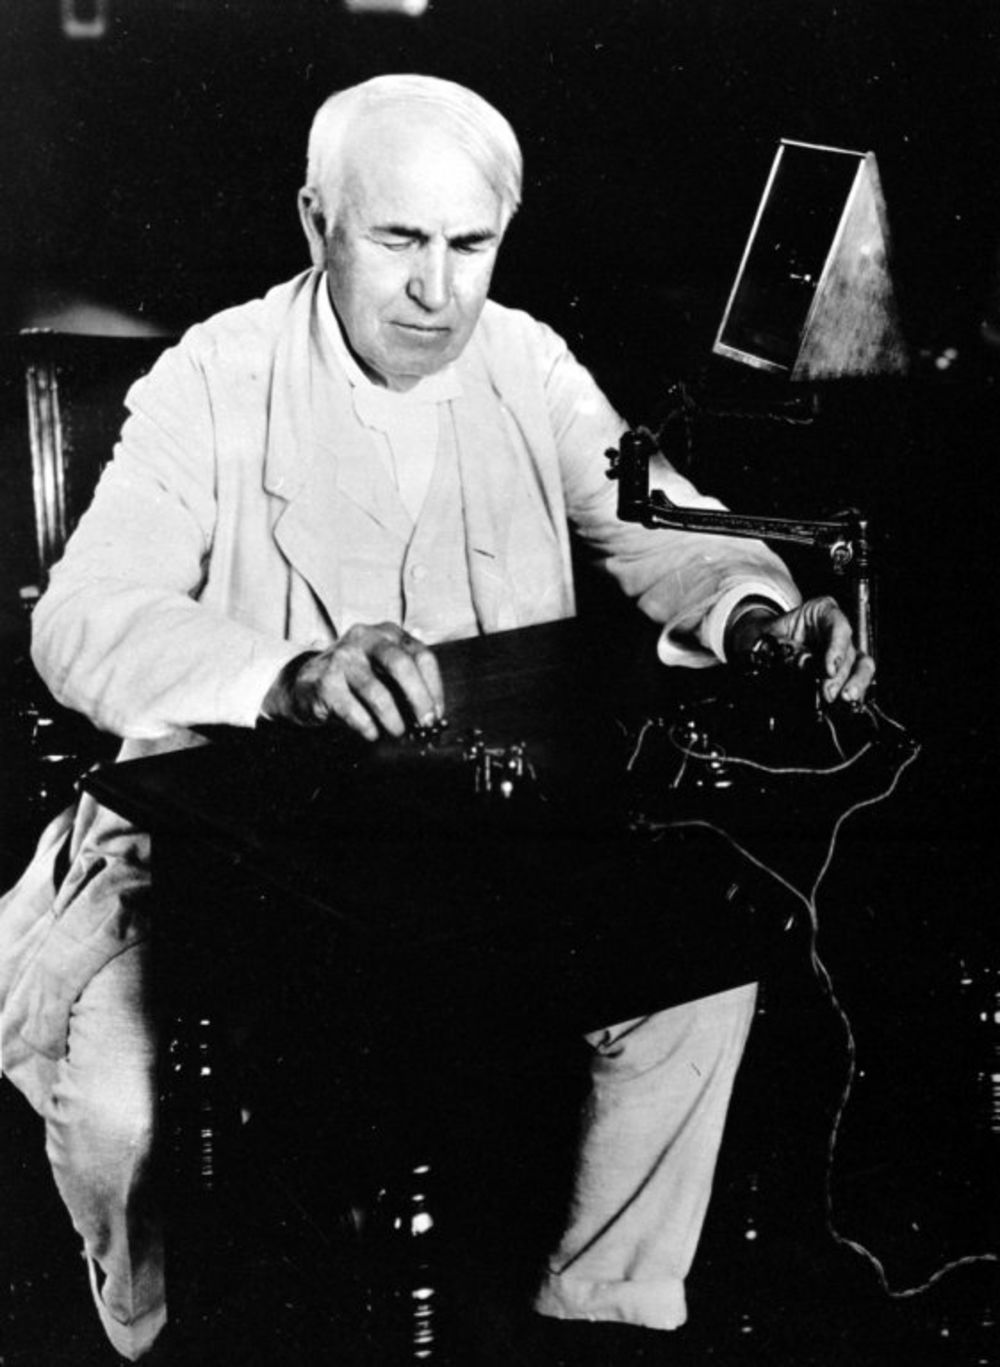 Tomas Edison